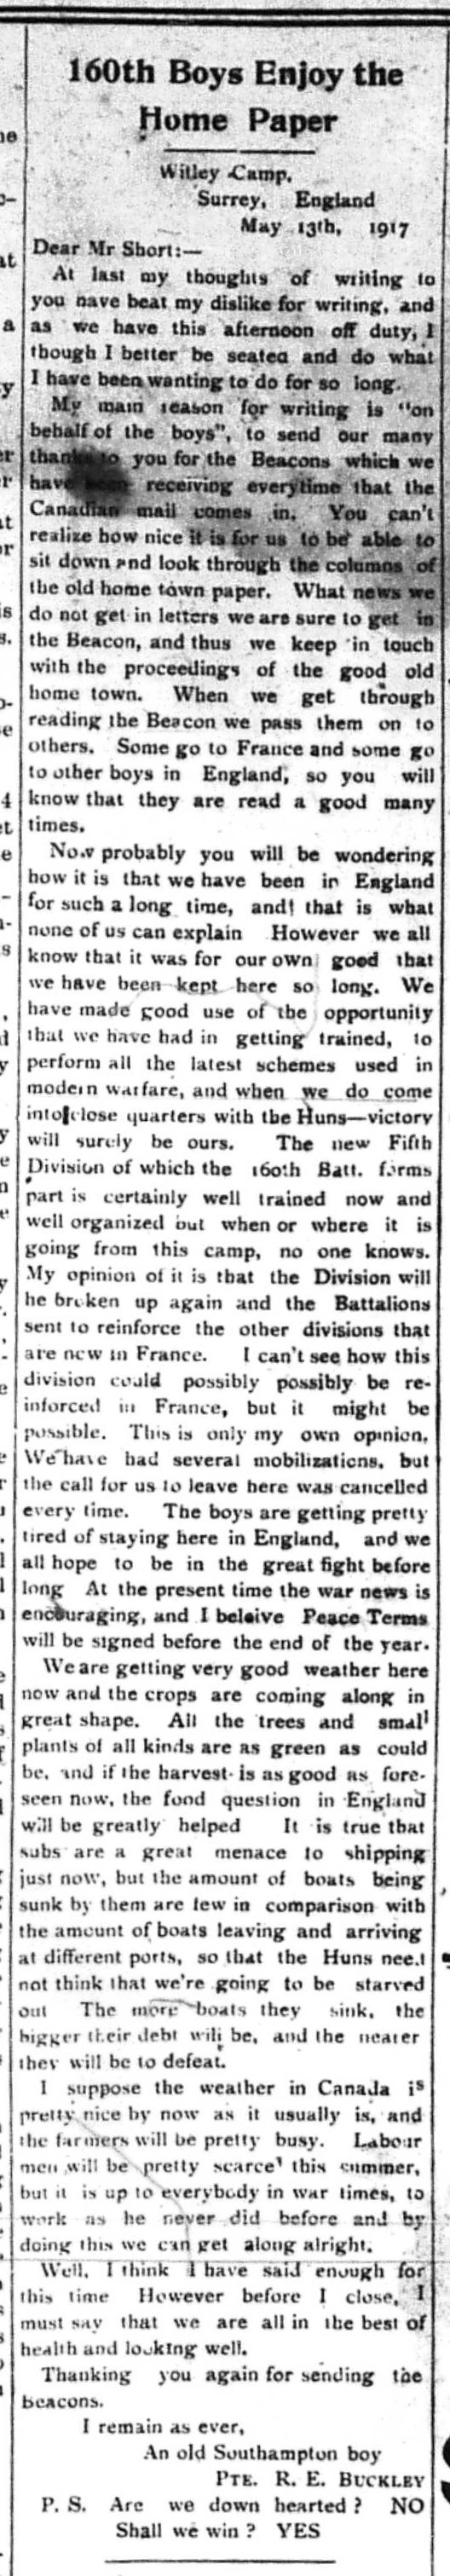 The Beacon Southampton, June 7, 1917